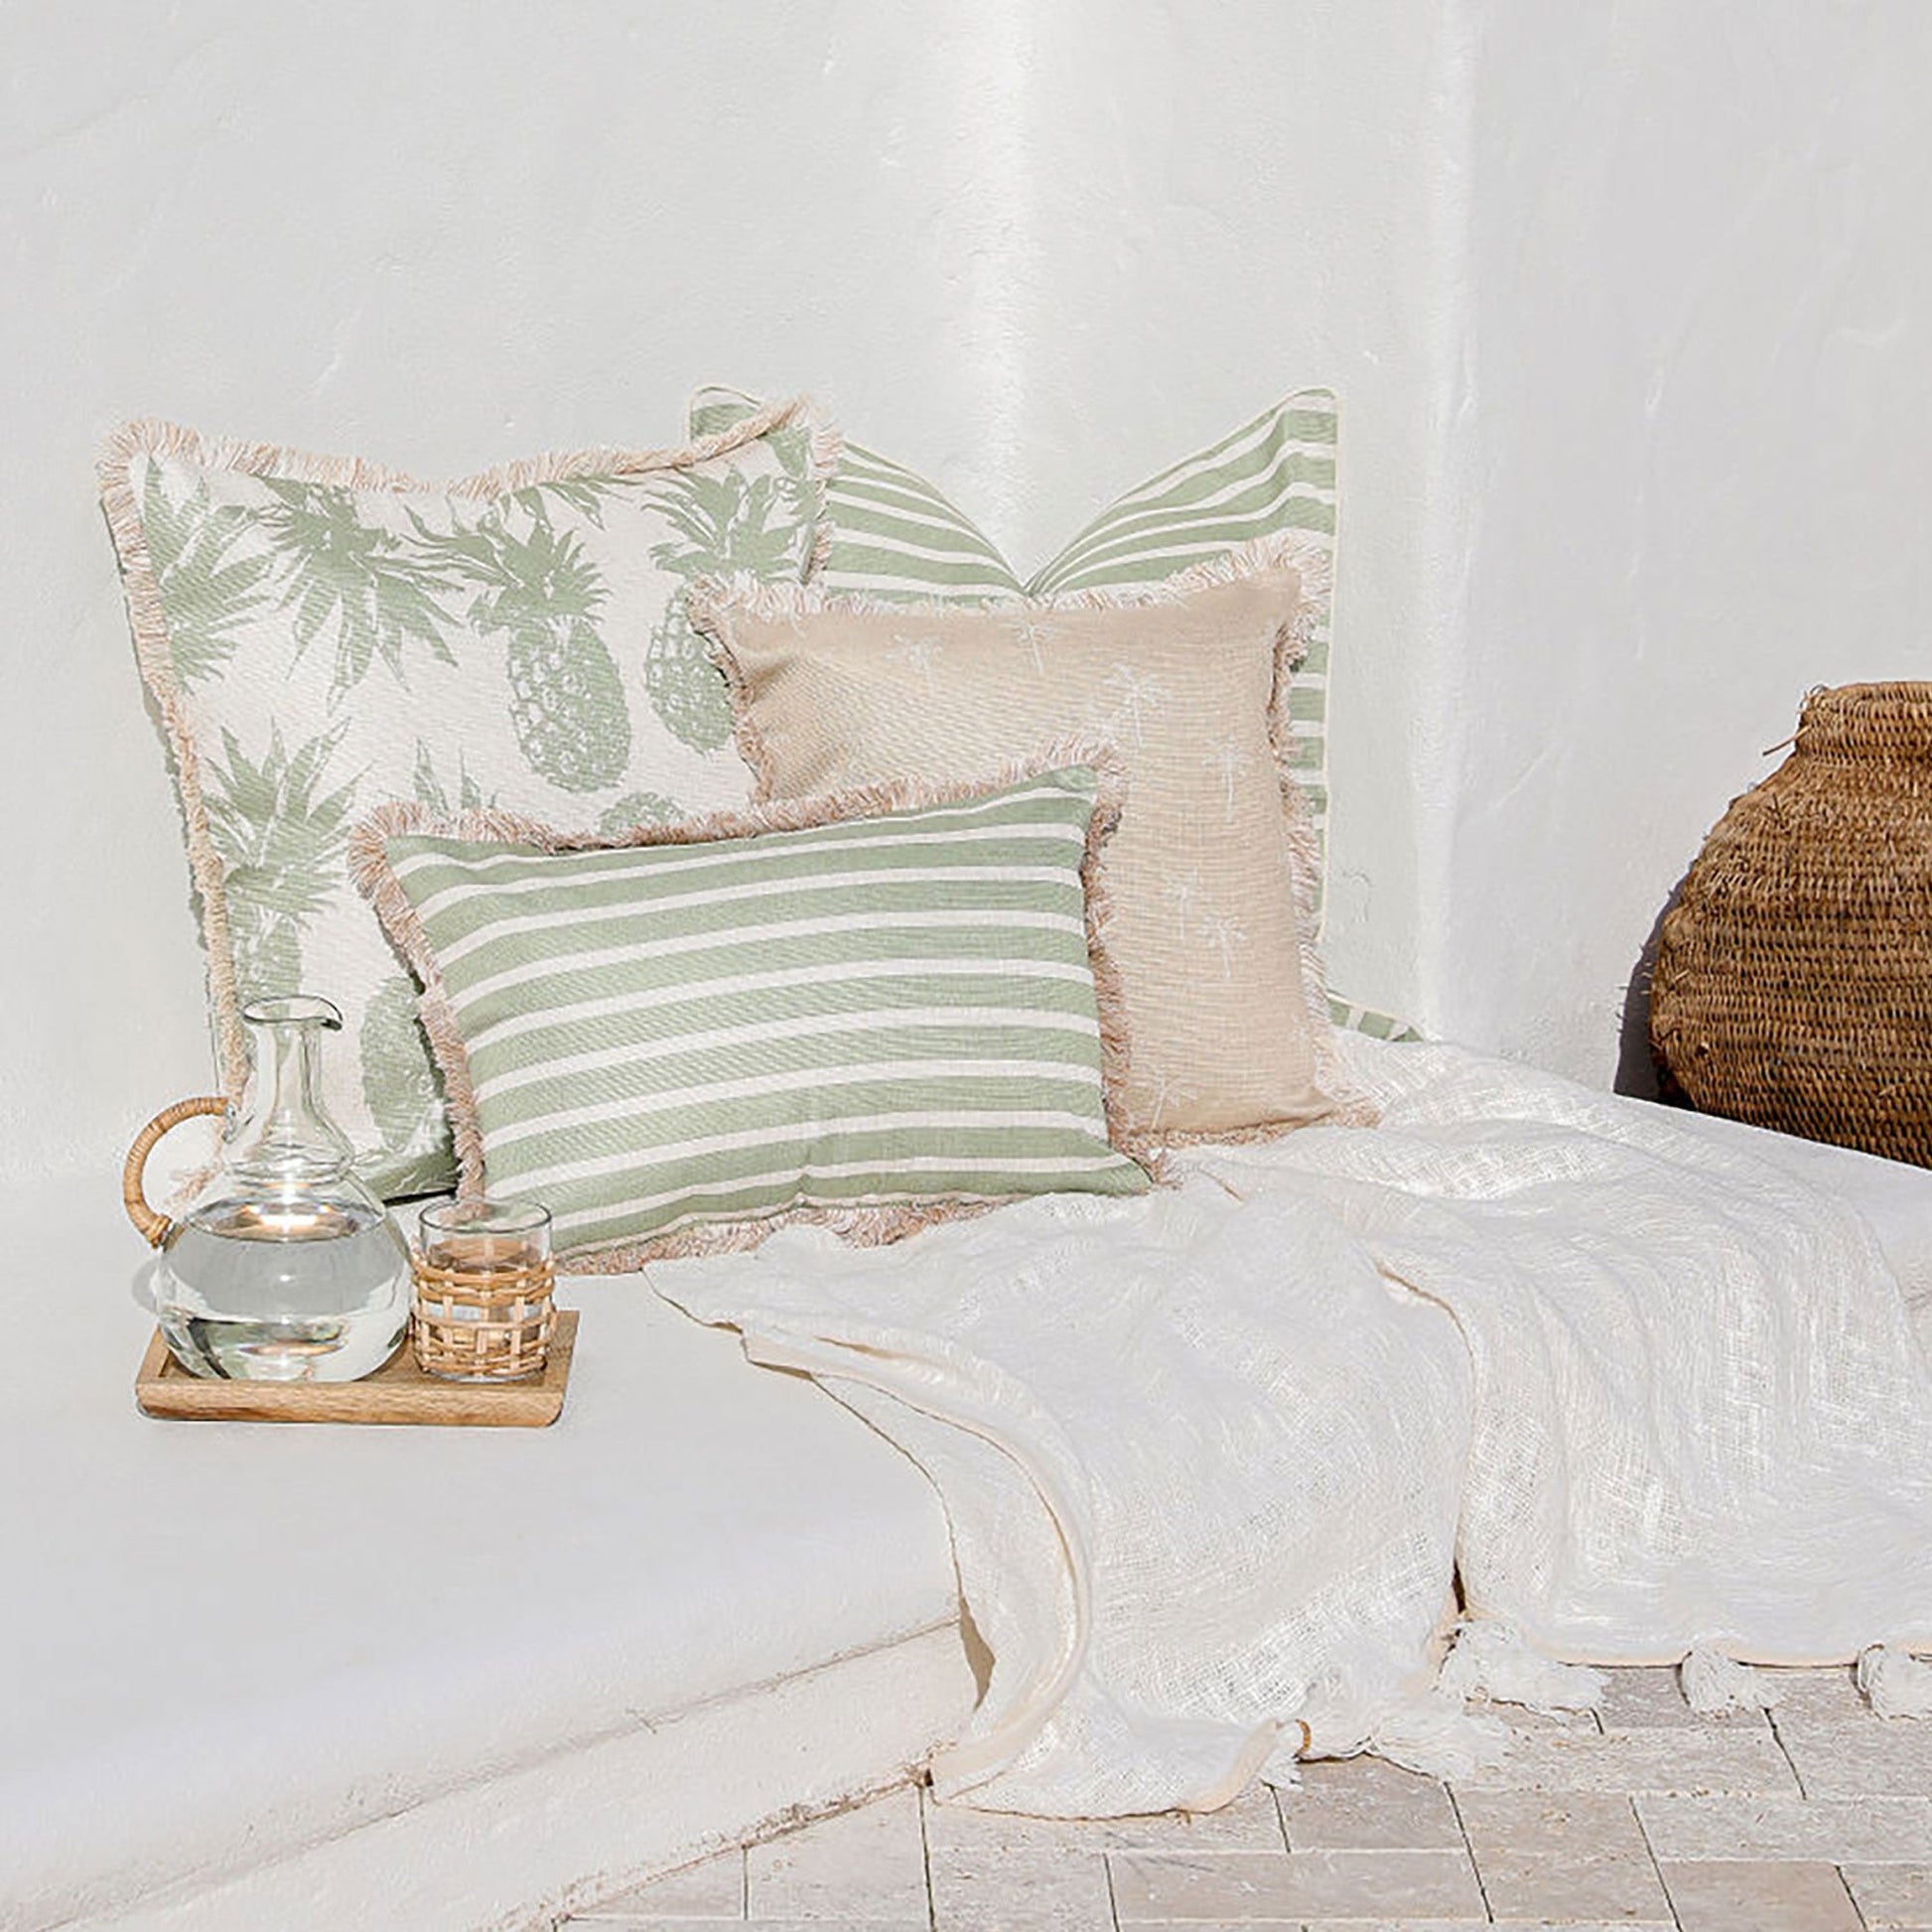 Cushion Cover-With Piping-Hampton Stripe Sage-60cm x 60cm - BM House & Garden